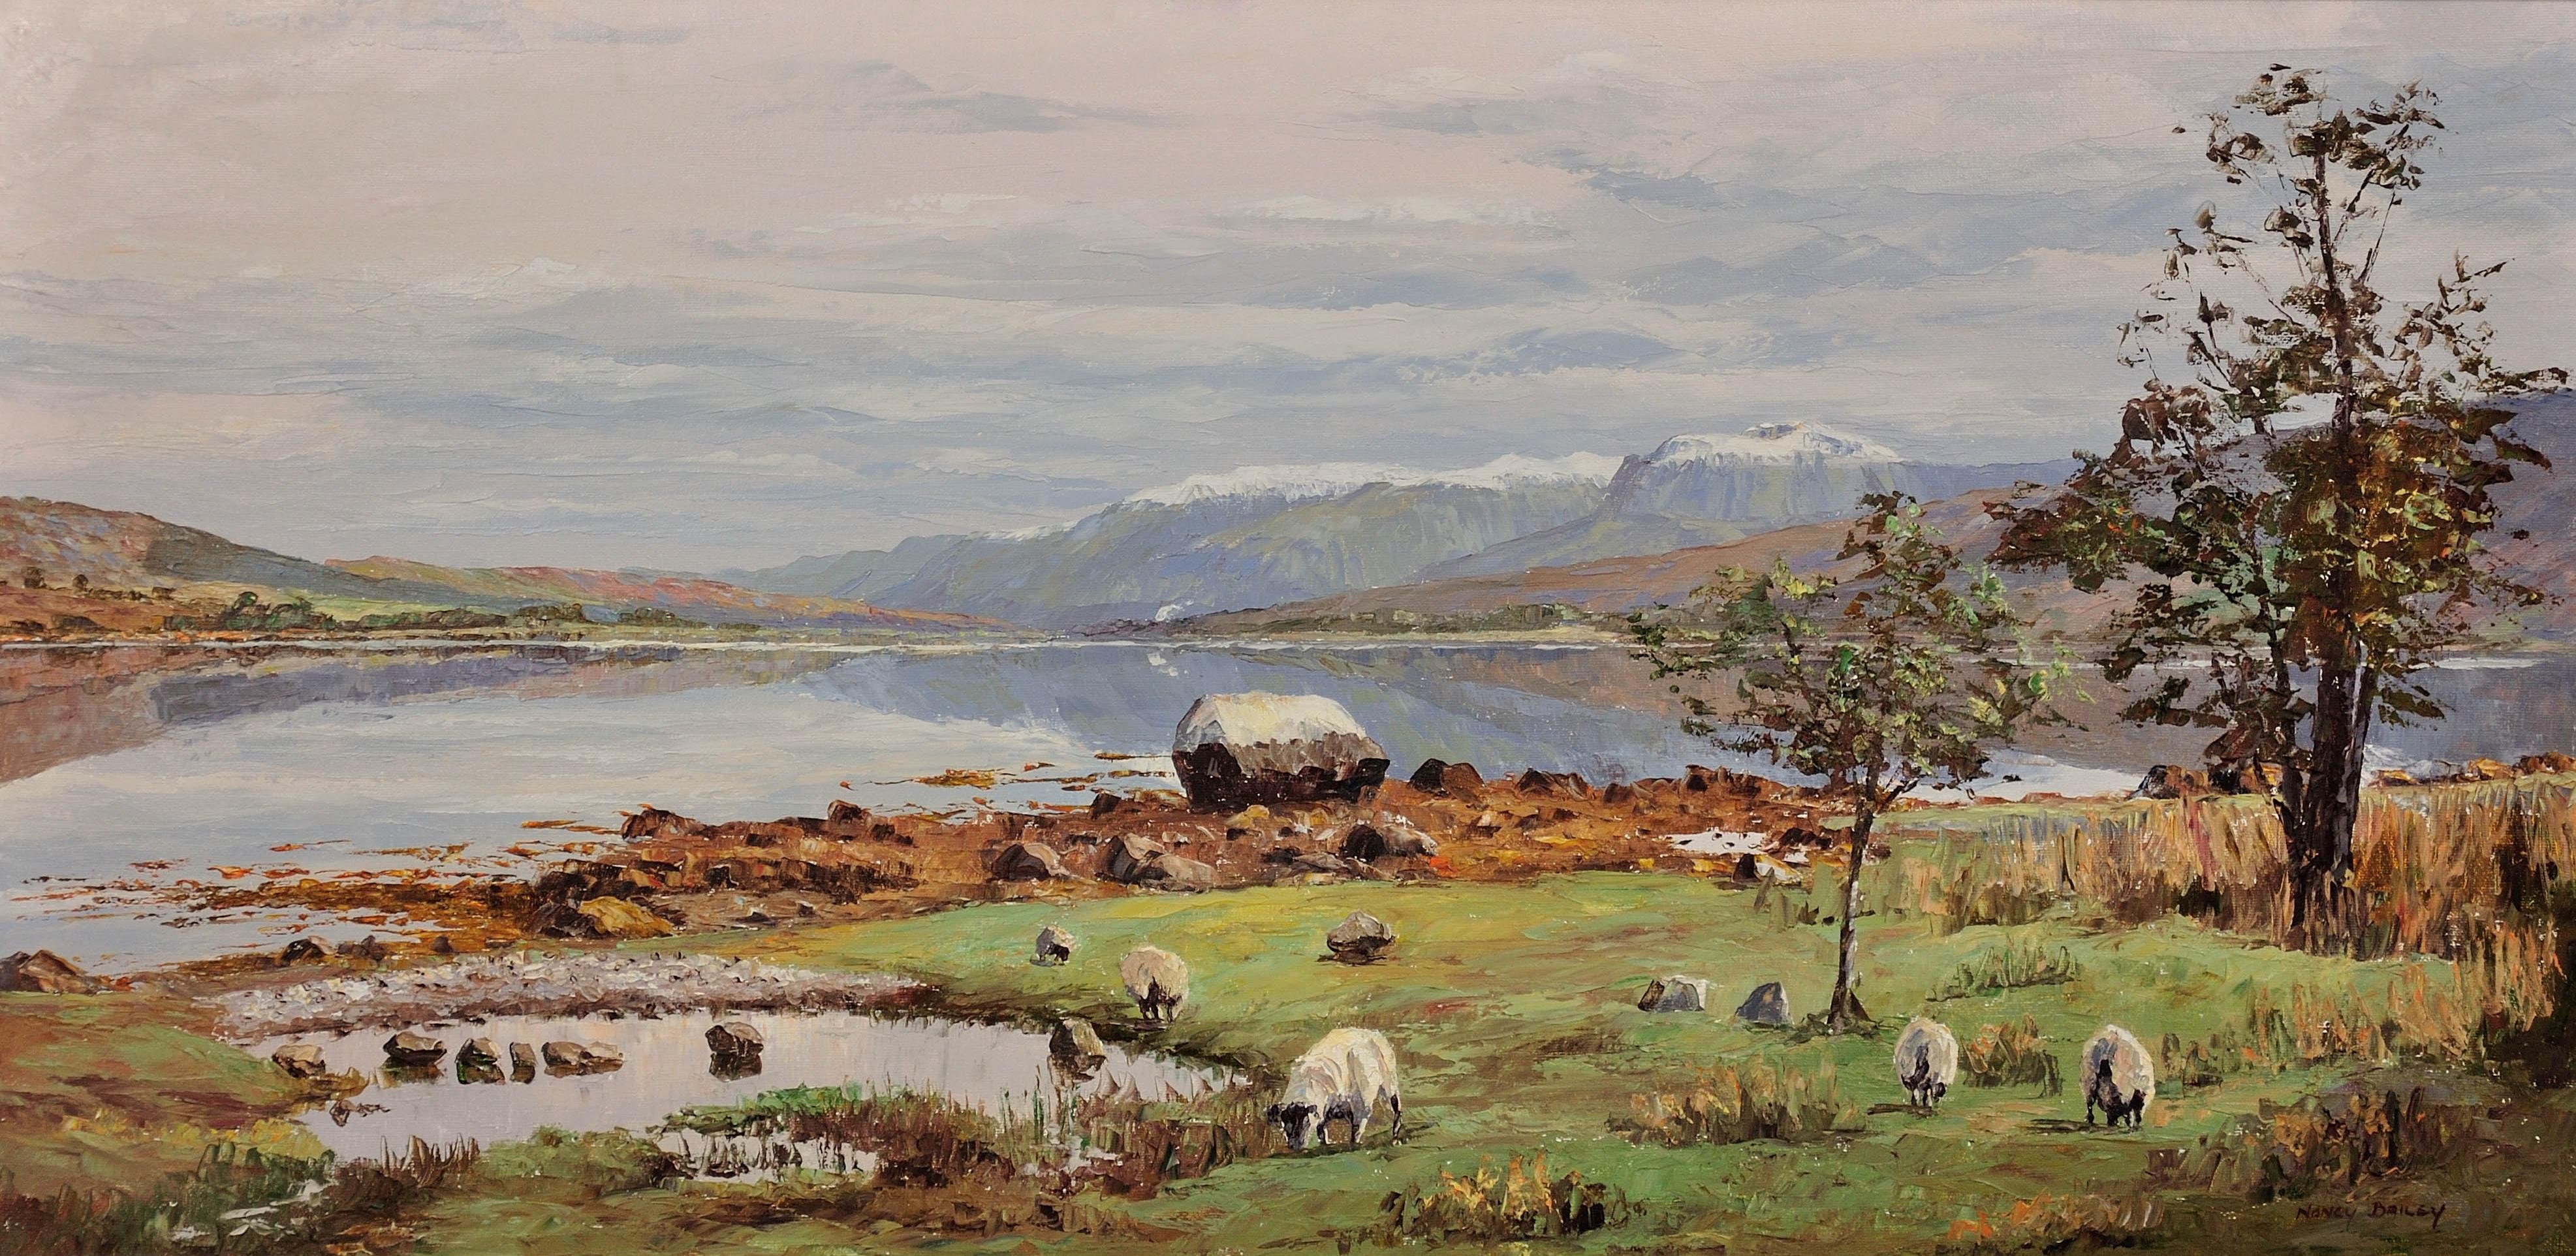 Ben Nevis from Loch Eil. Impasto.Scottish Highlands.Grampian Mountains. Scotland - Painting by Nancy Bailey